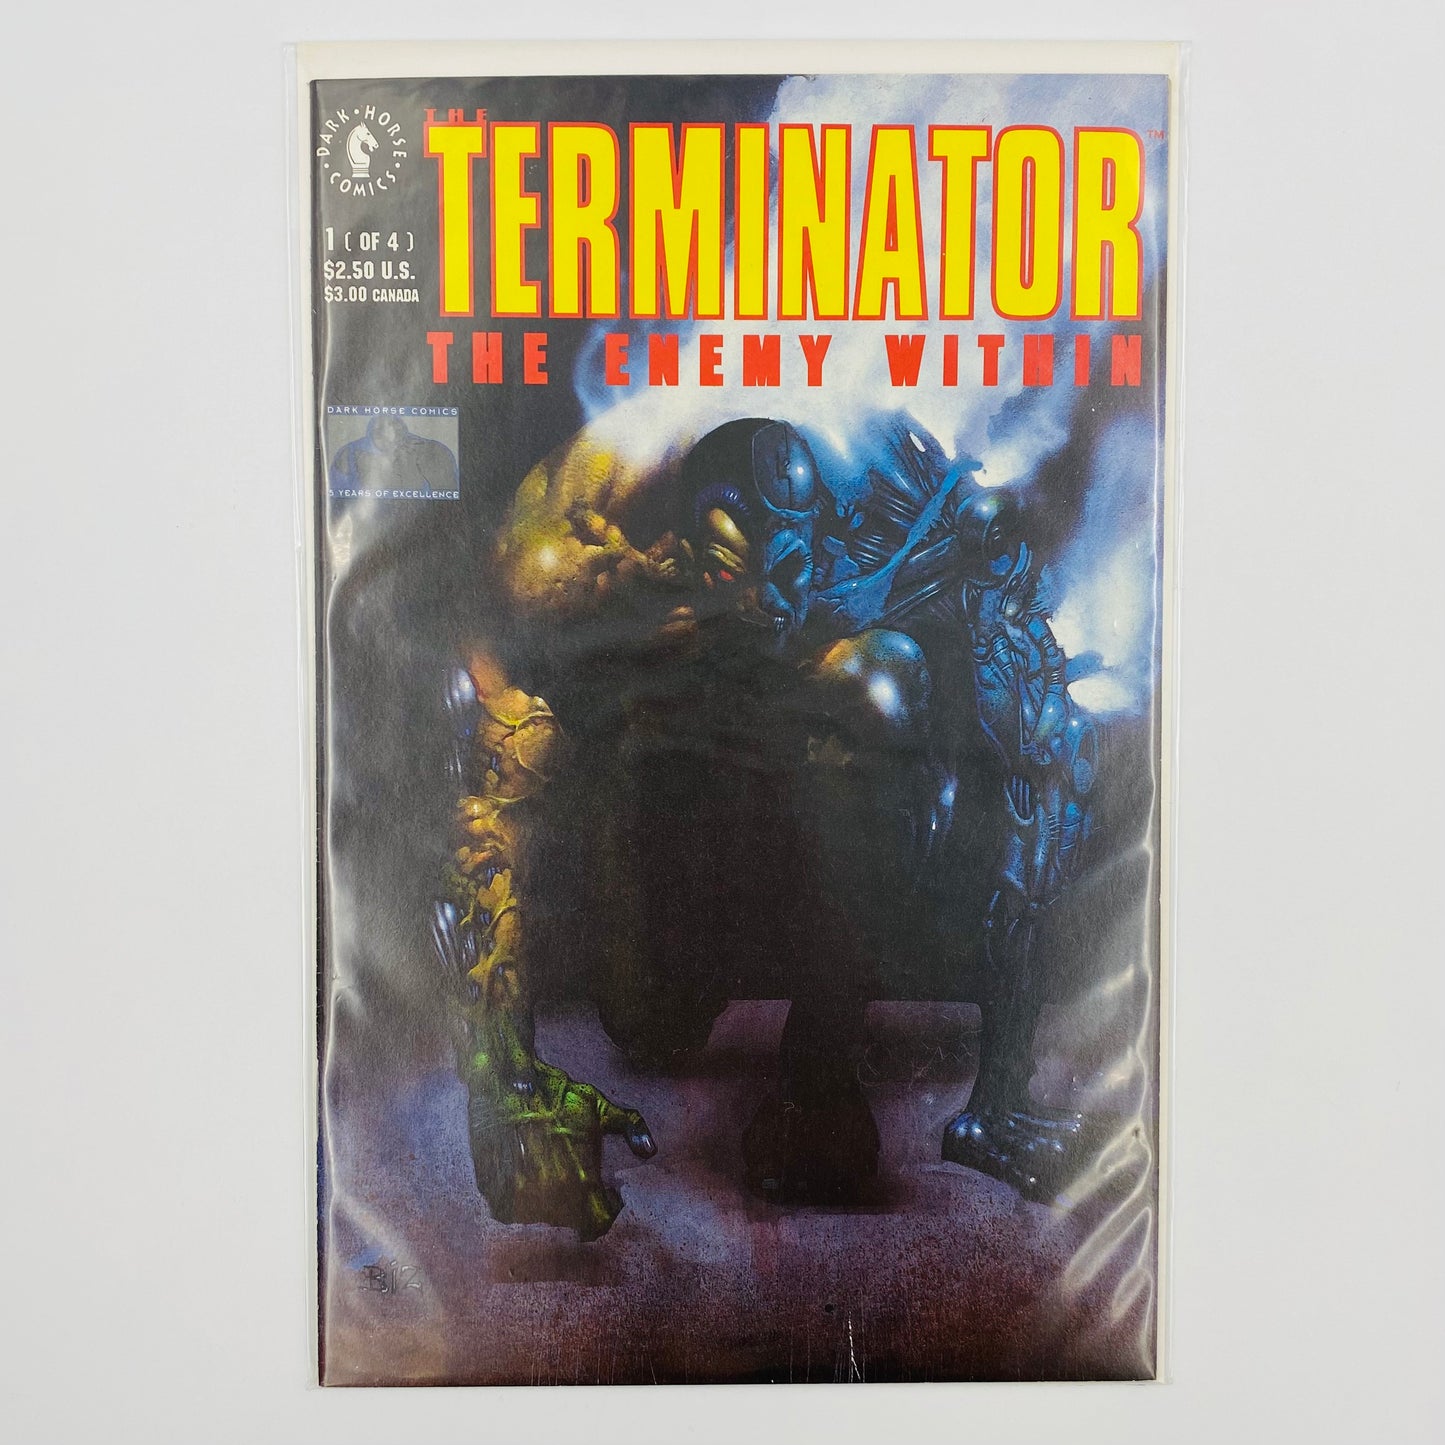 Terminator The Enemy Within #1 (1991) Dark Horse